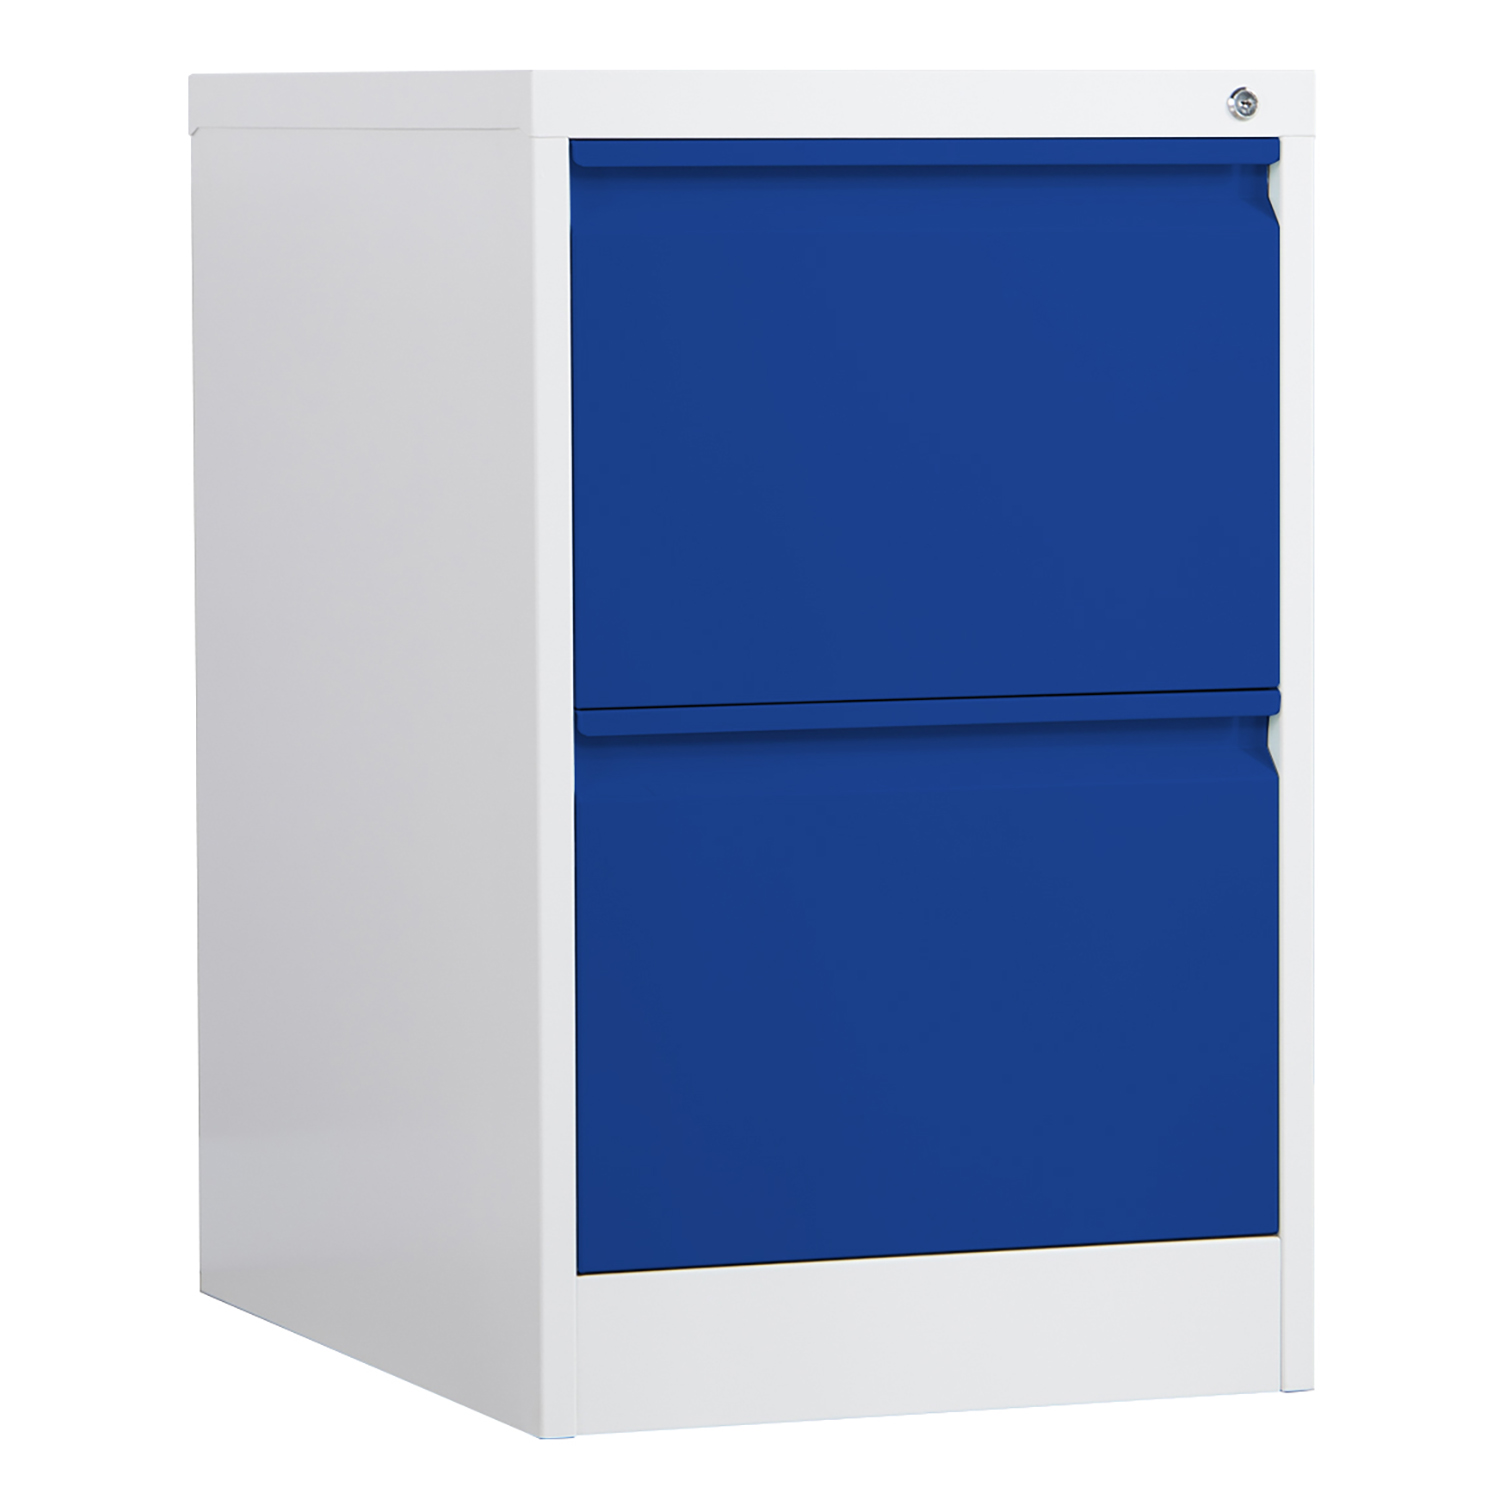 Phoenix FC Series FC1002GBK Filing Cabinet in Blue